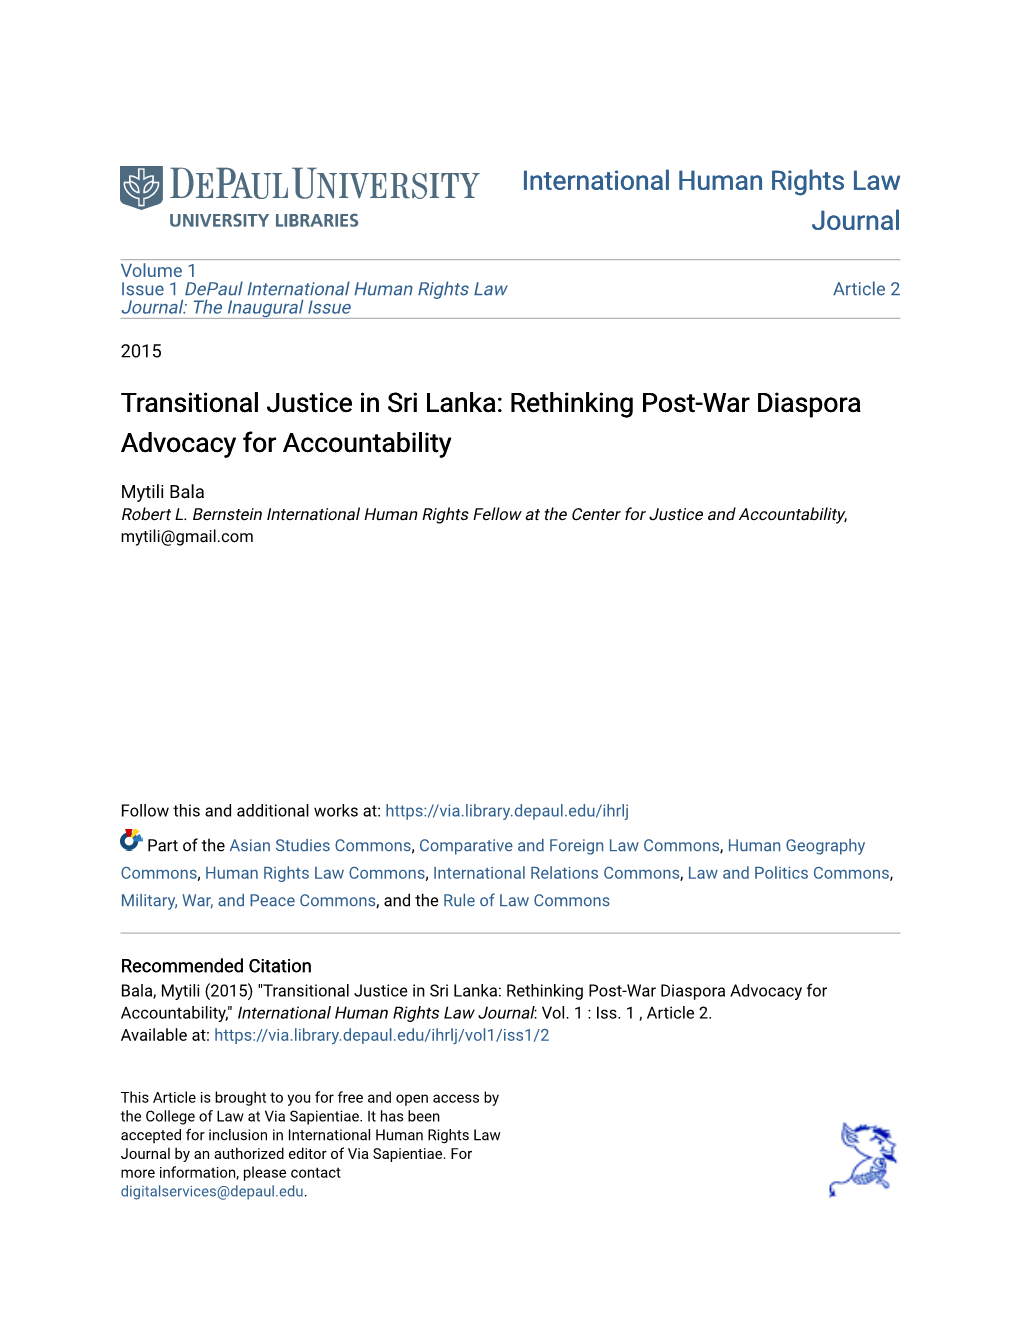 Transitional Justice in Sri Lanka: Rethinking Post-War Diaspora Advocacy for Accountability